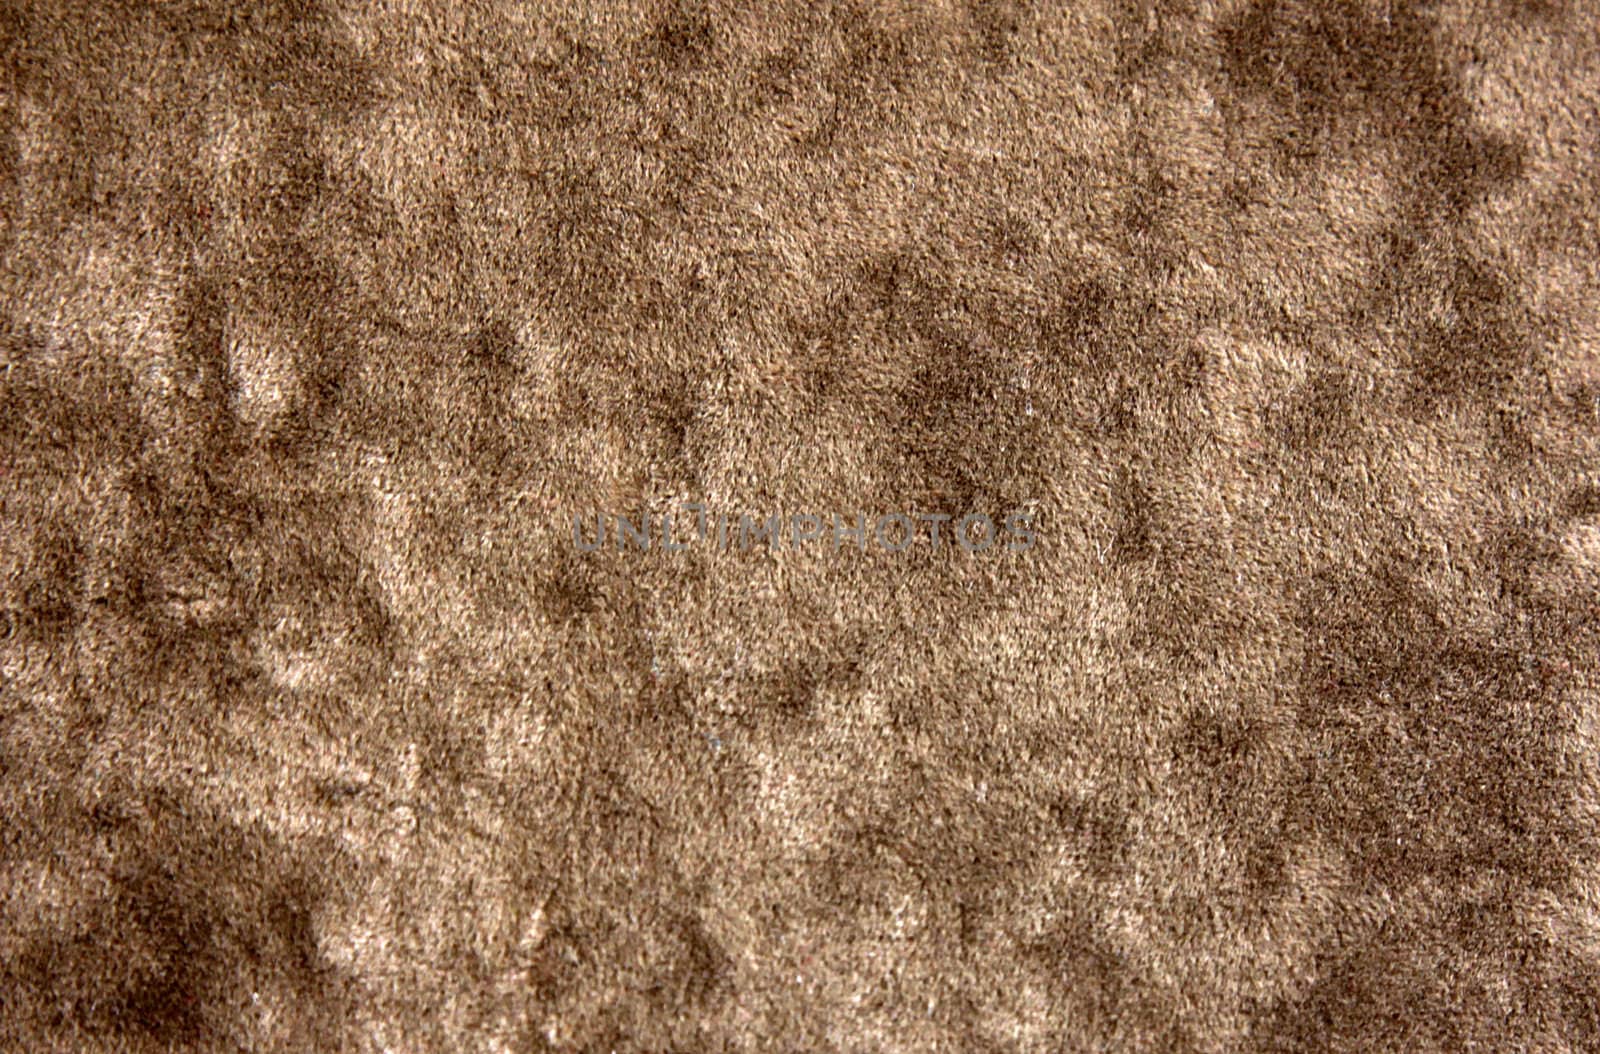 A close-up of a soft fluffy beige texture.
